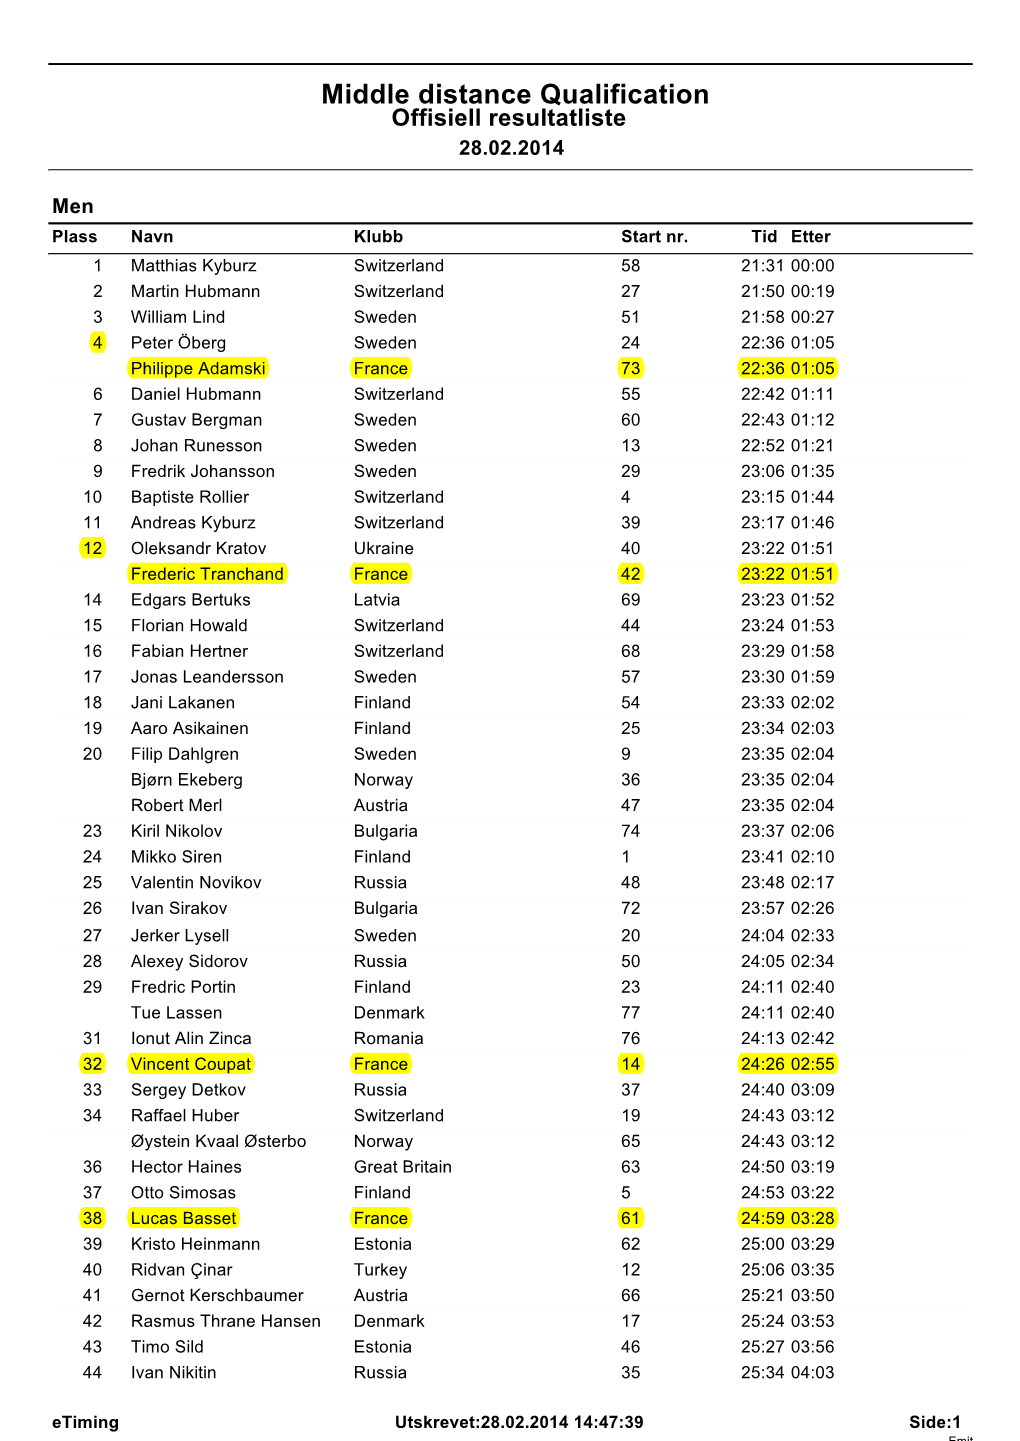 Middle Distance Qualification Offisiell Resultatliste 28.02.2014